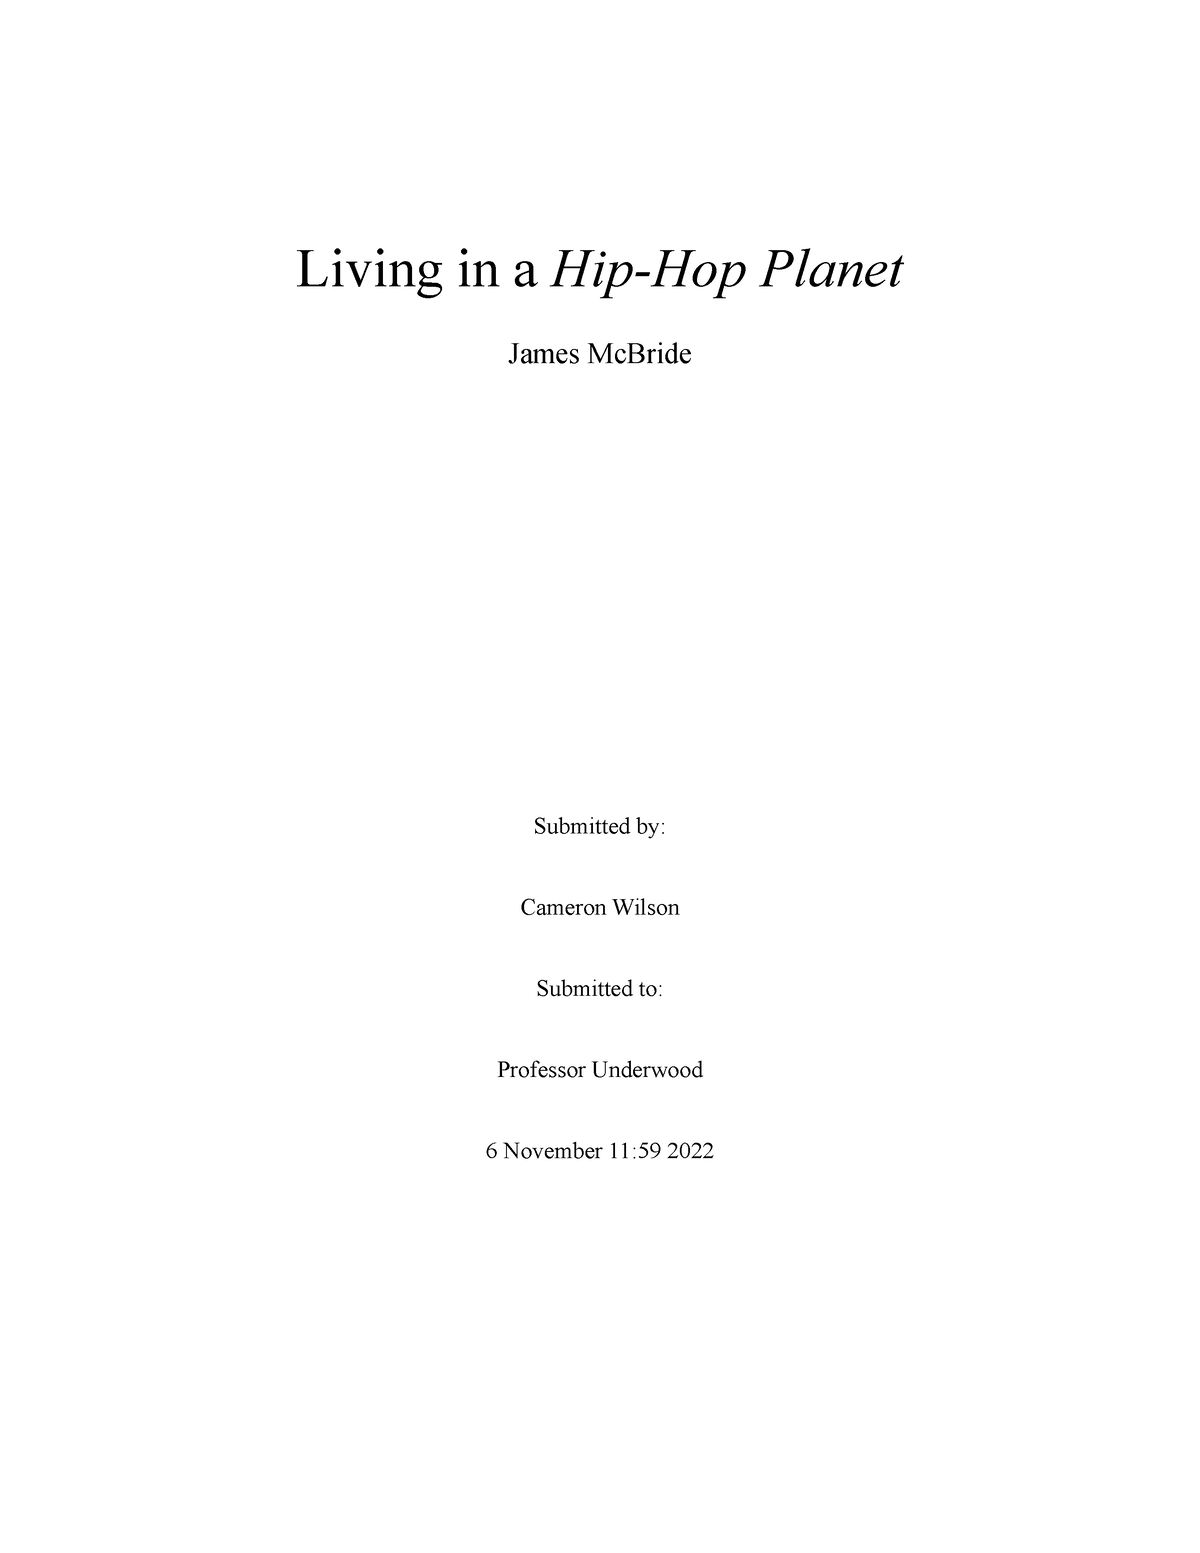 essay on hip hop